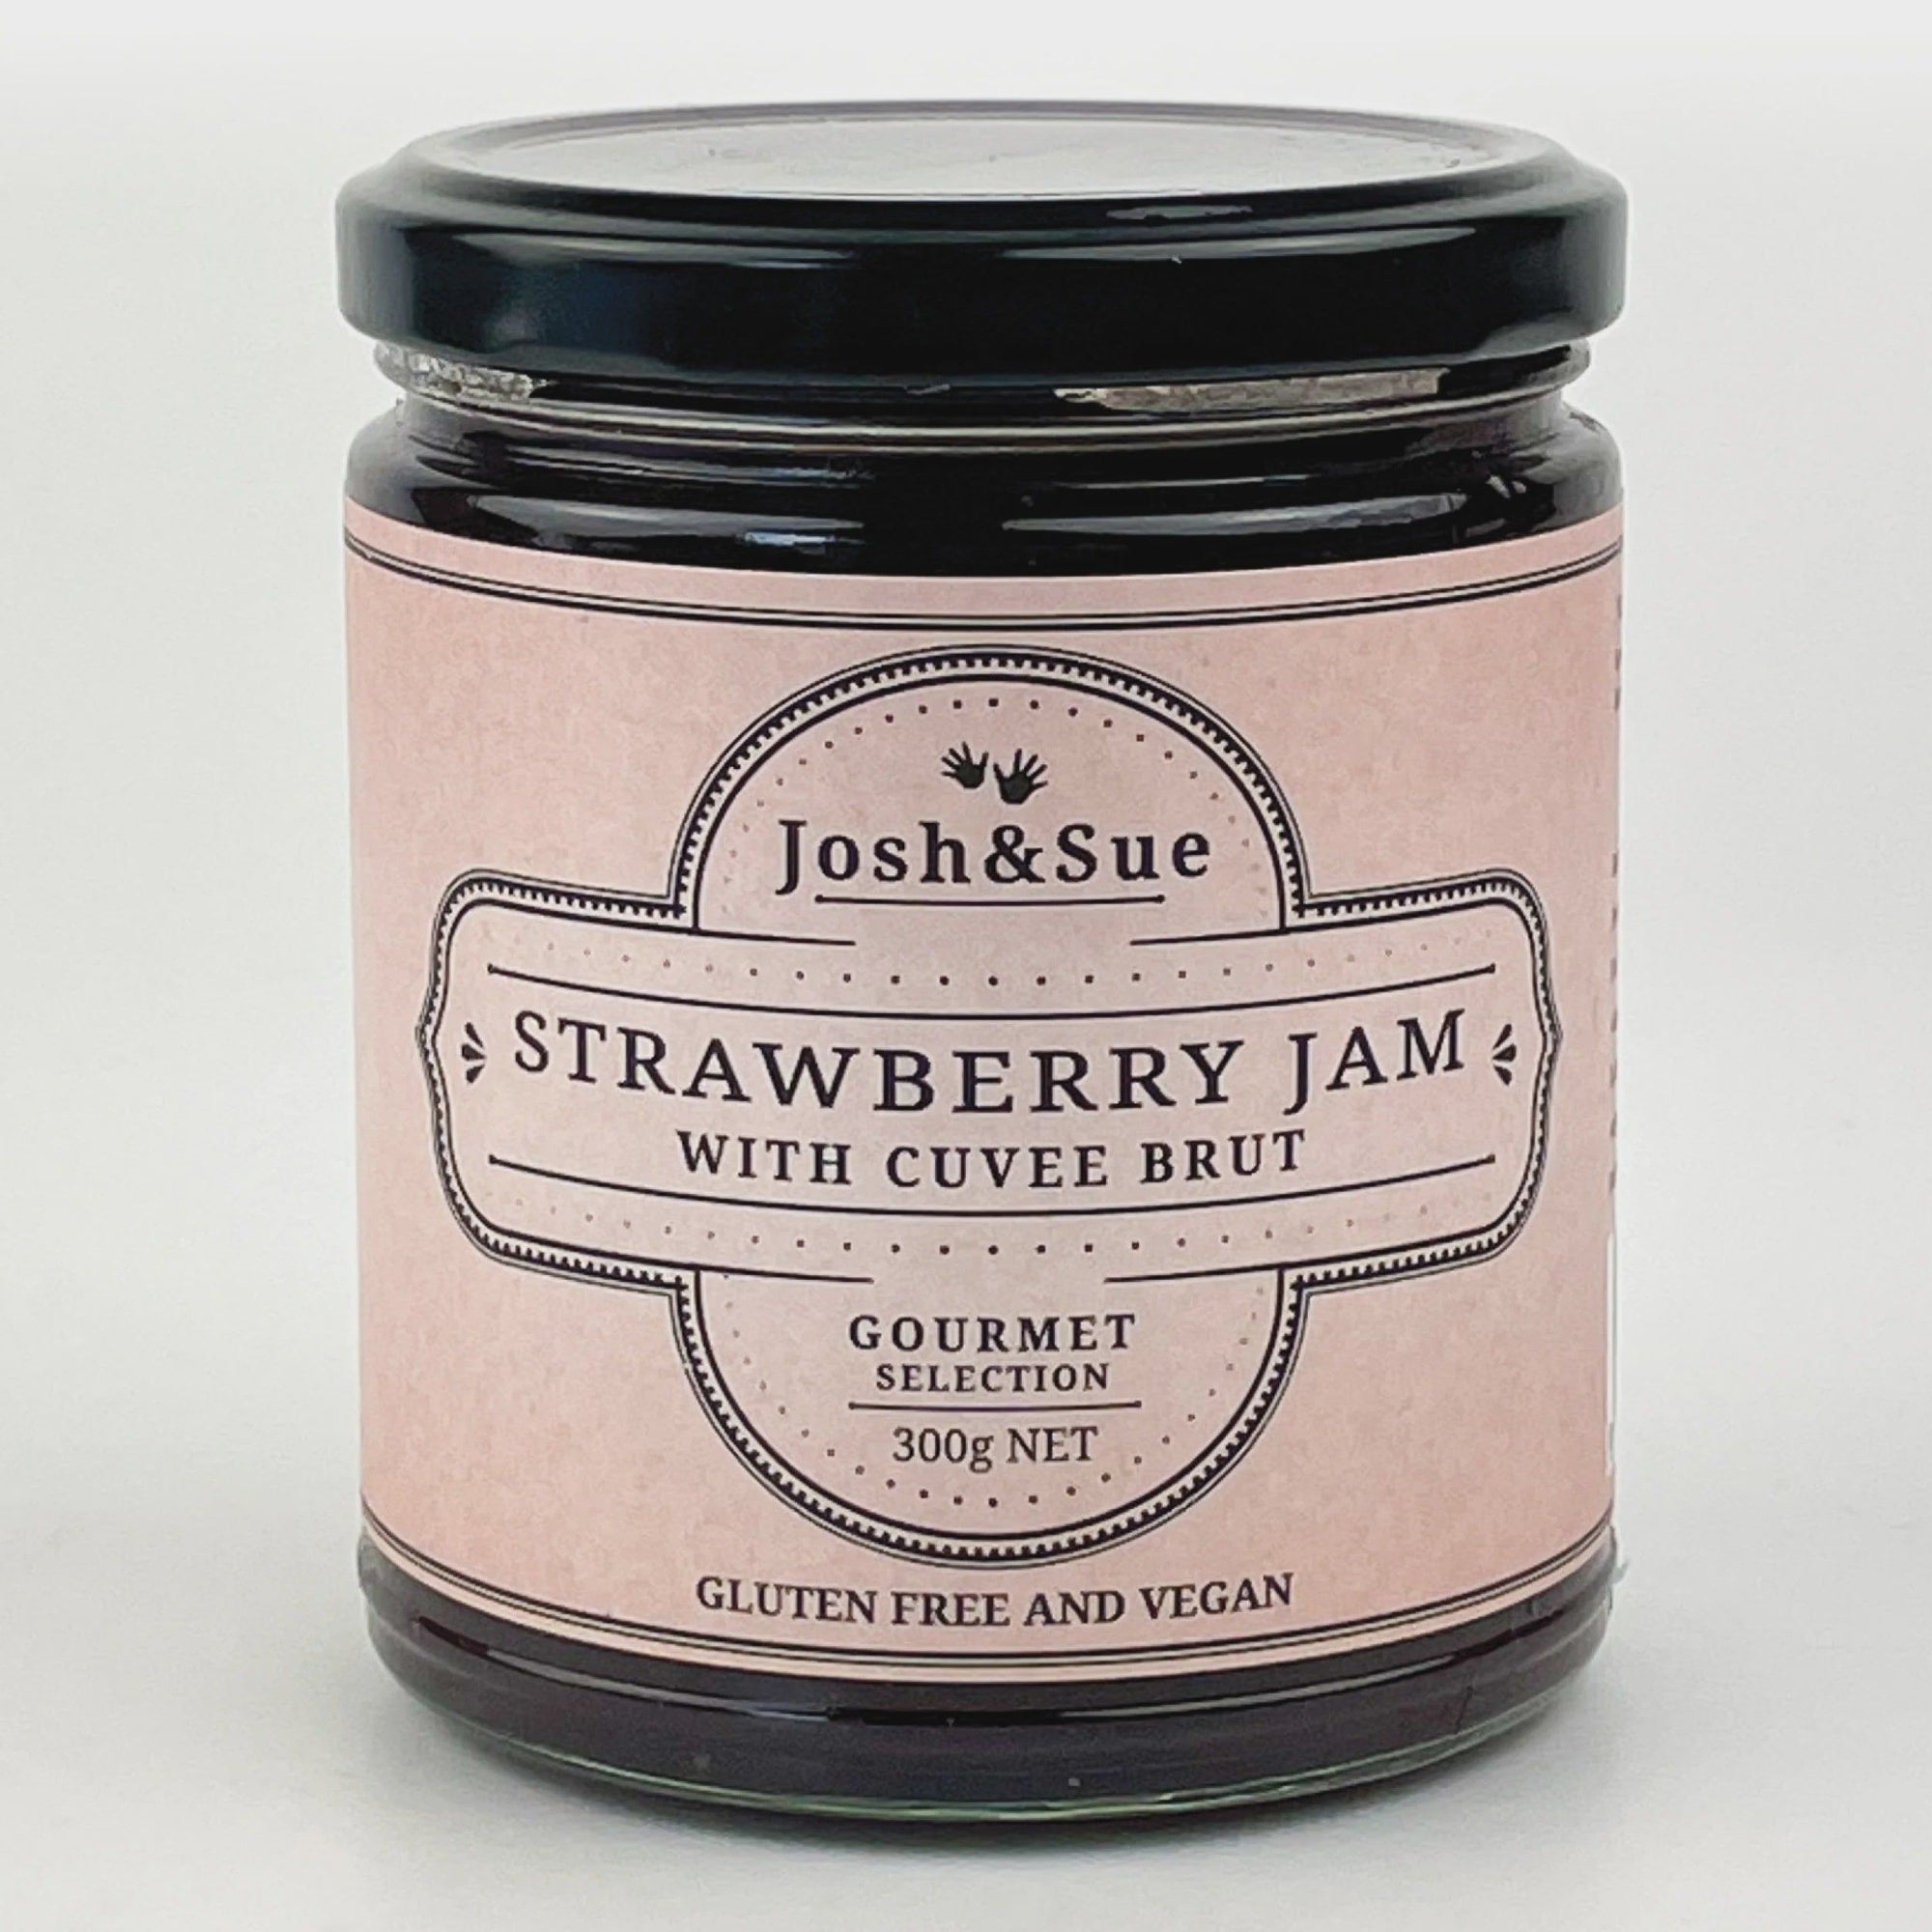 Josh & Sue's Strawberry Jam with Cuvee Brut